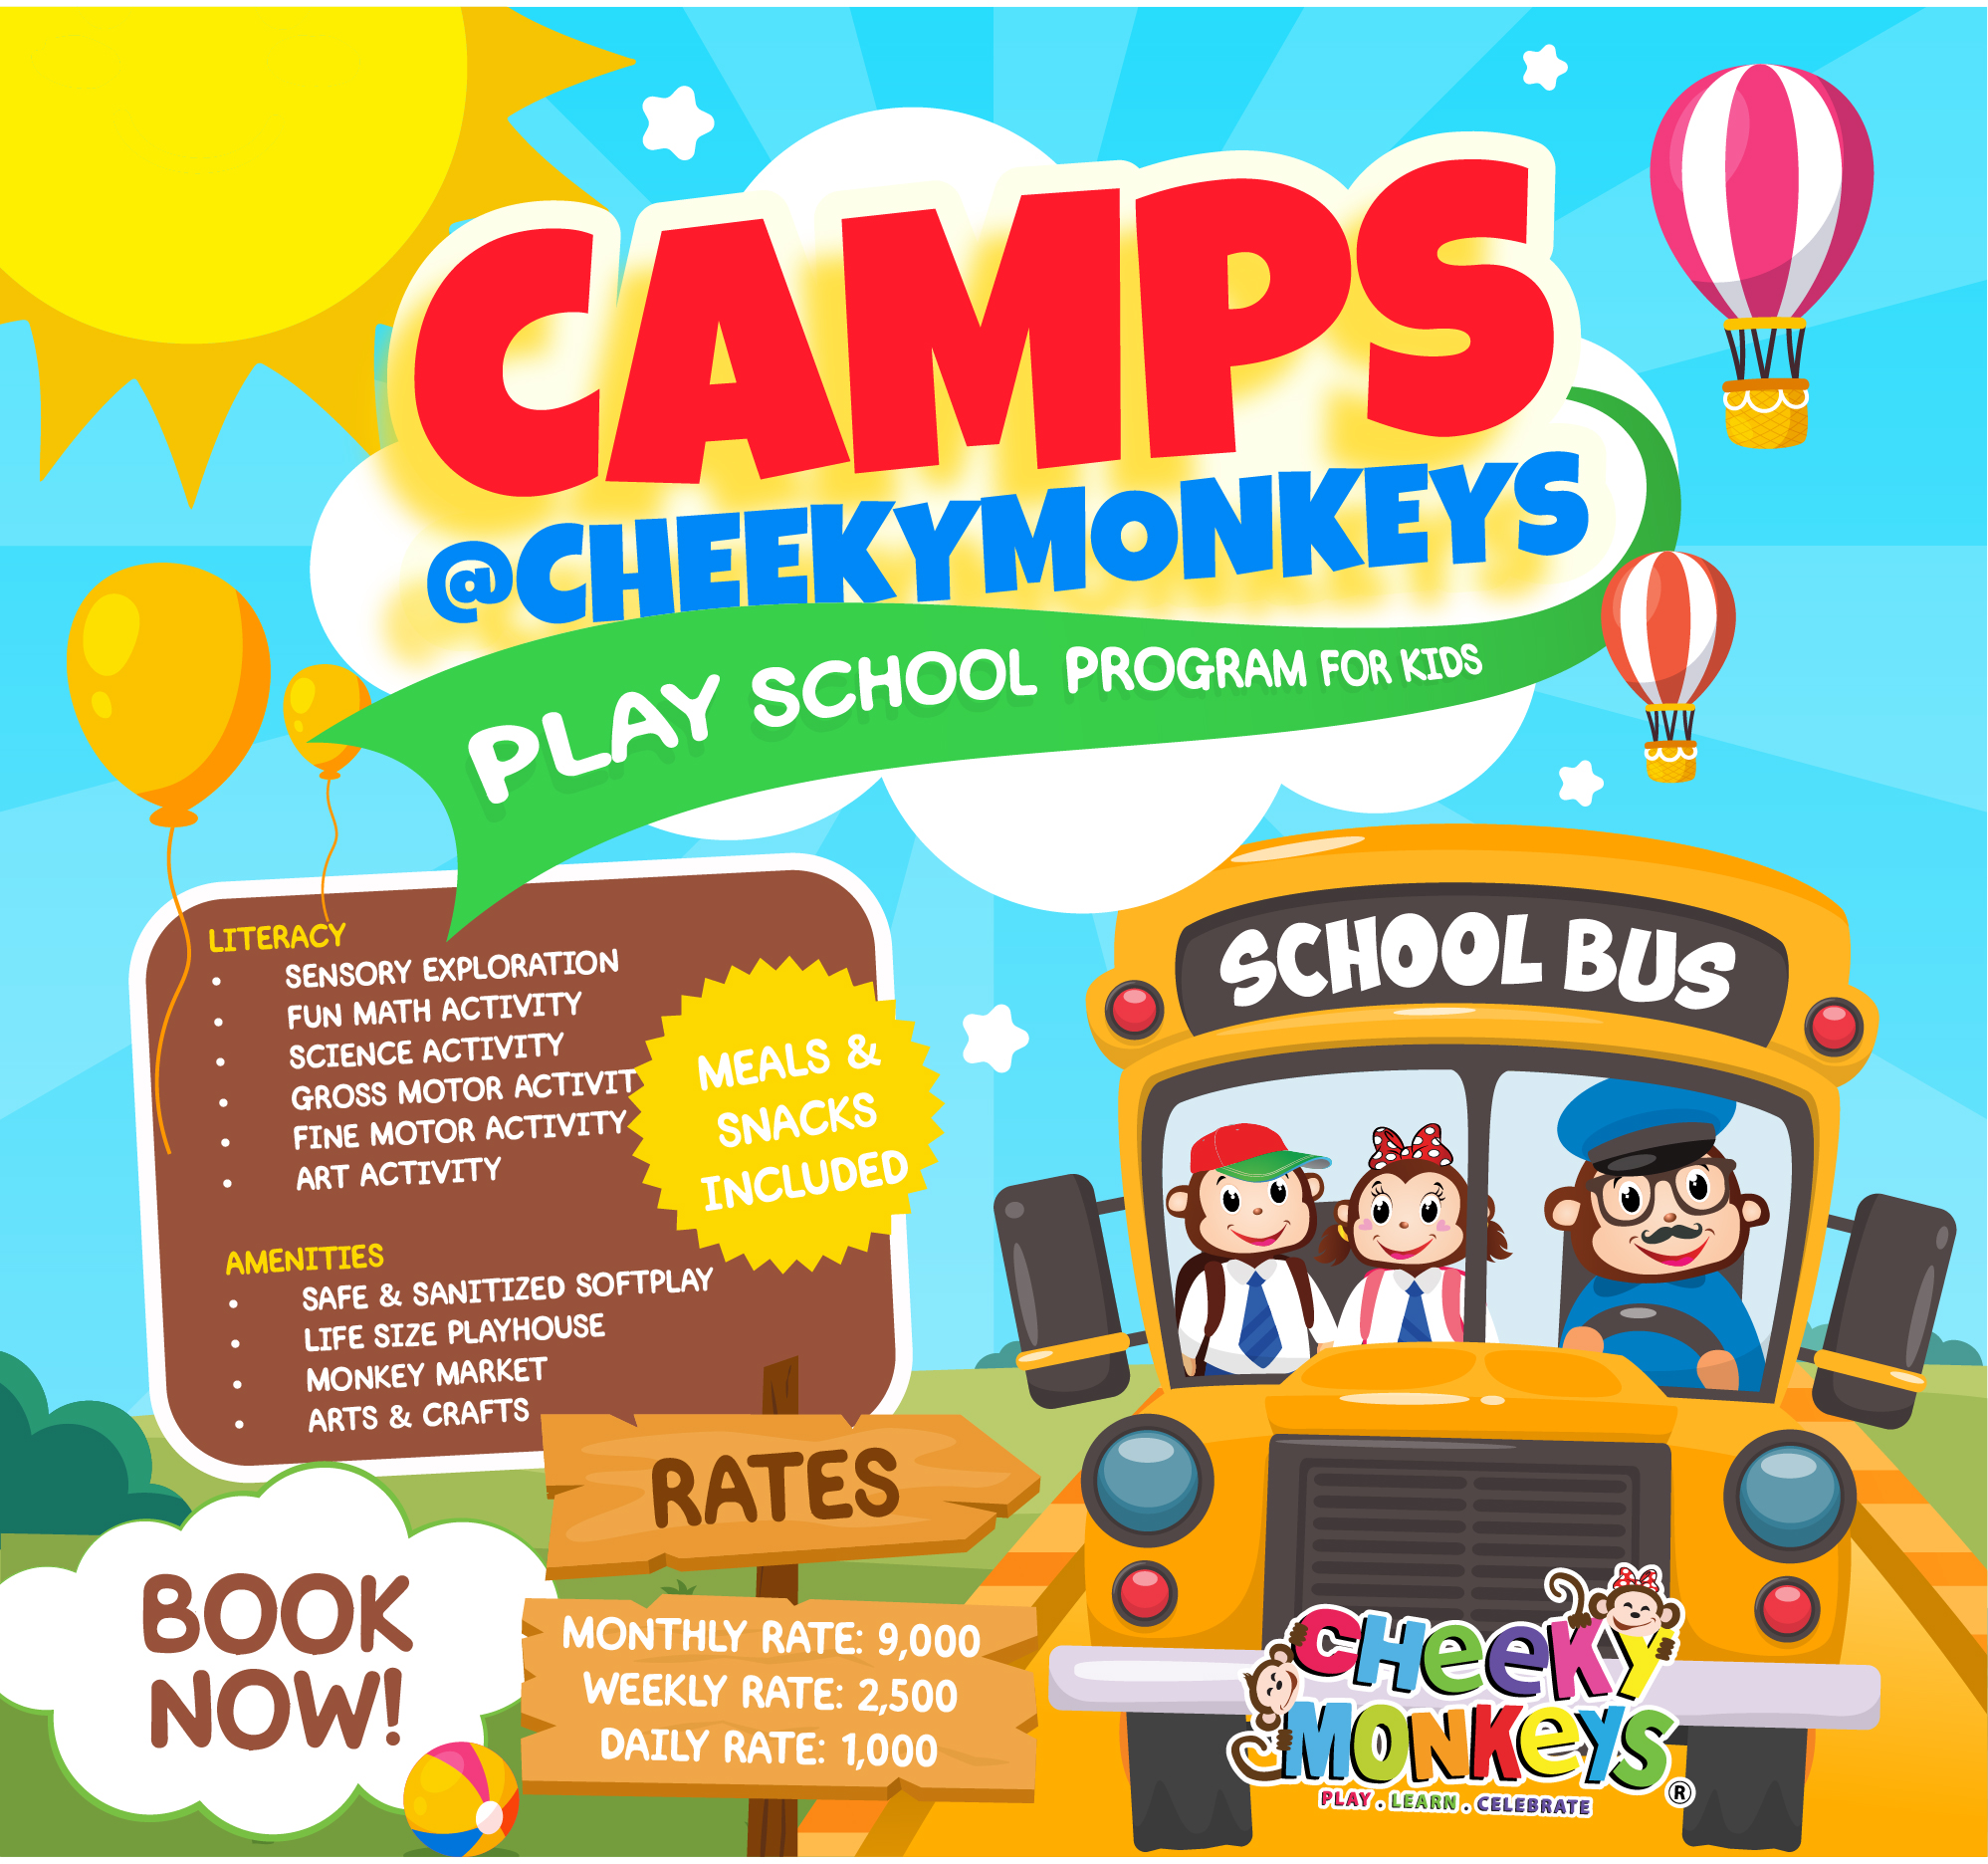 Cheeky Monkeys Philippines - Play School Program For Kids